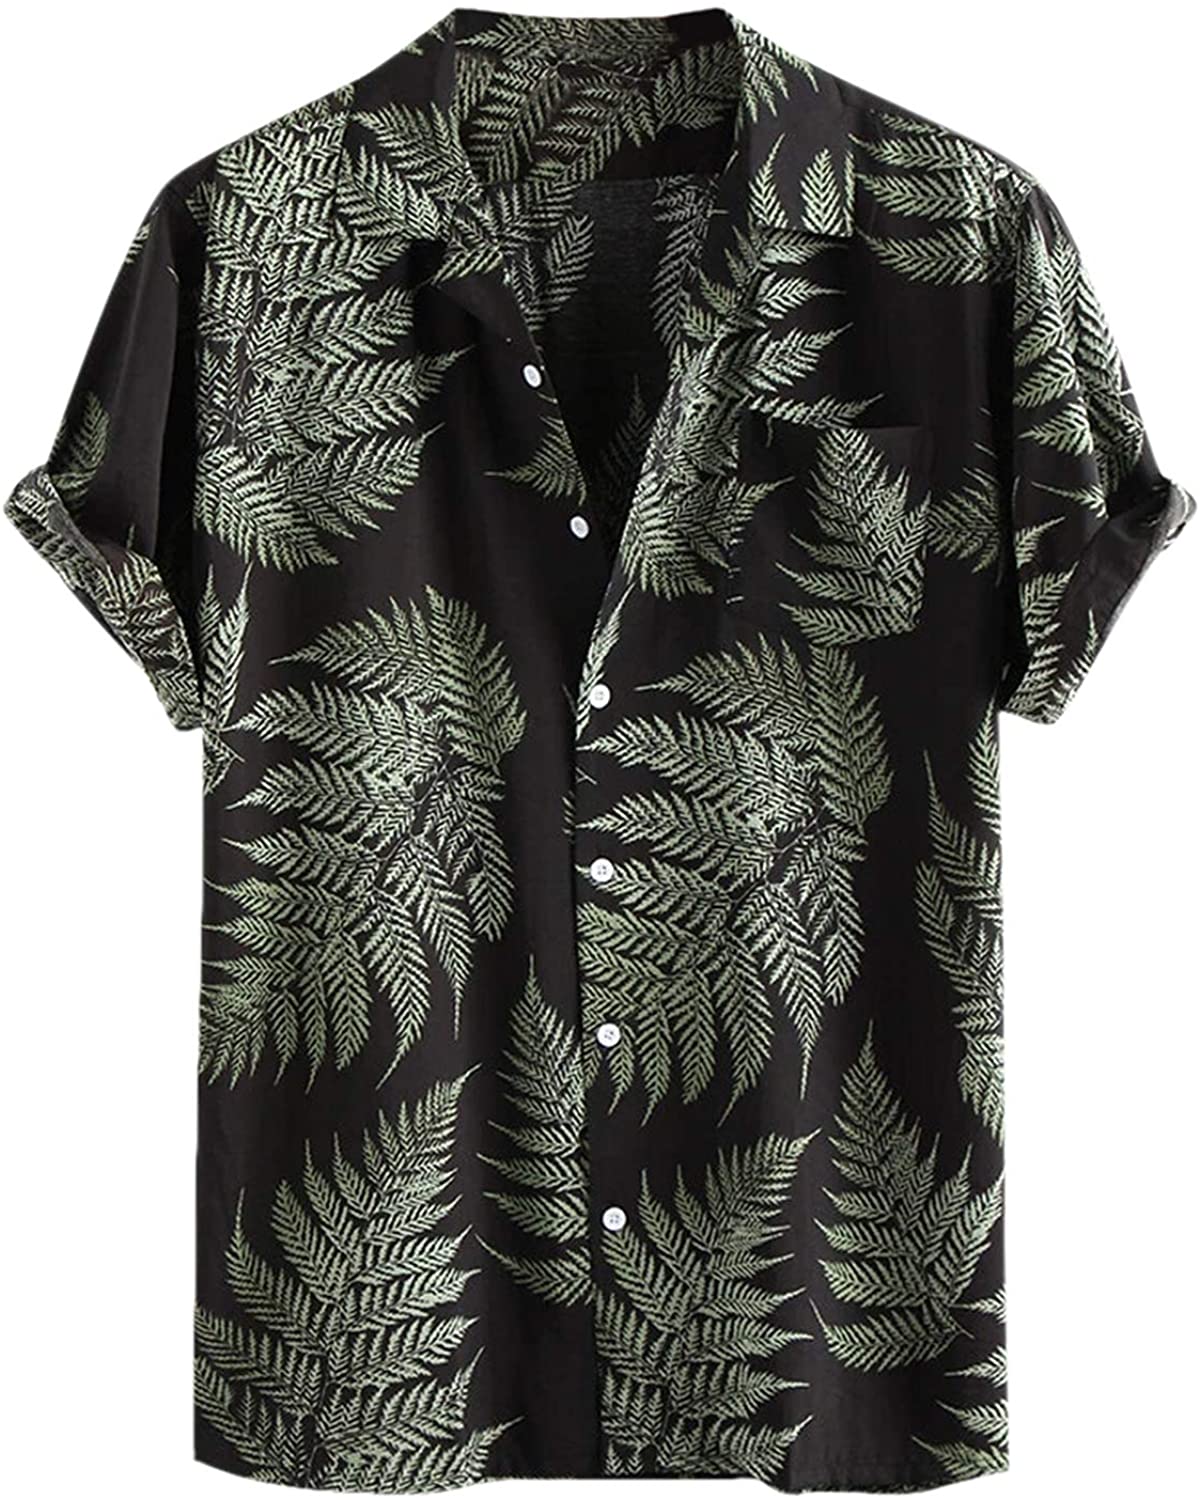 Toufguy Men's Hawaiian Shirt Printed Linen Cotton Short Sleeve 